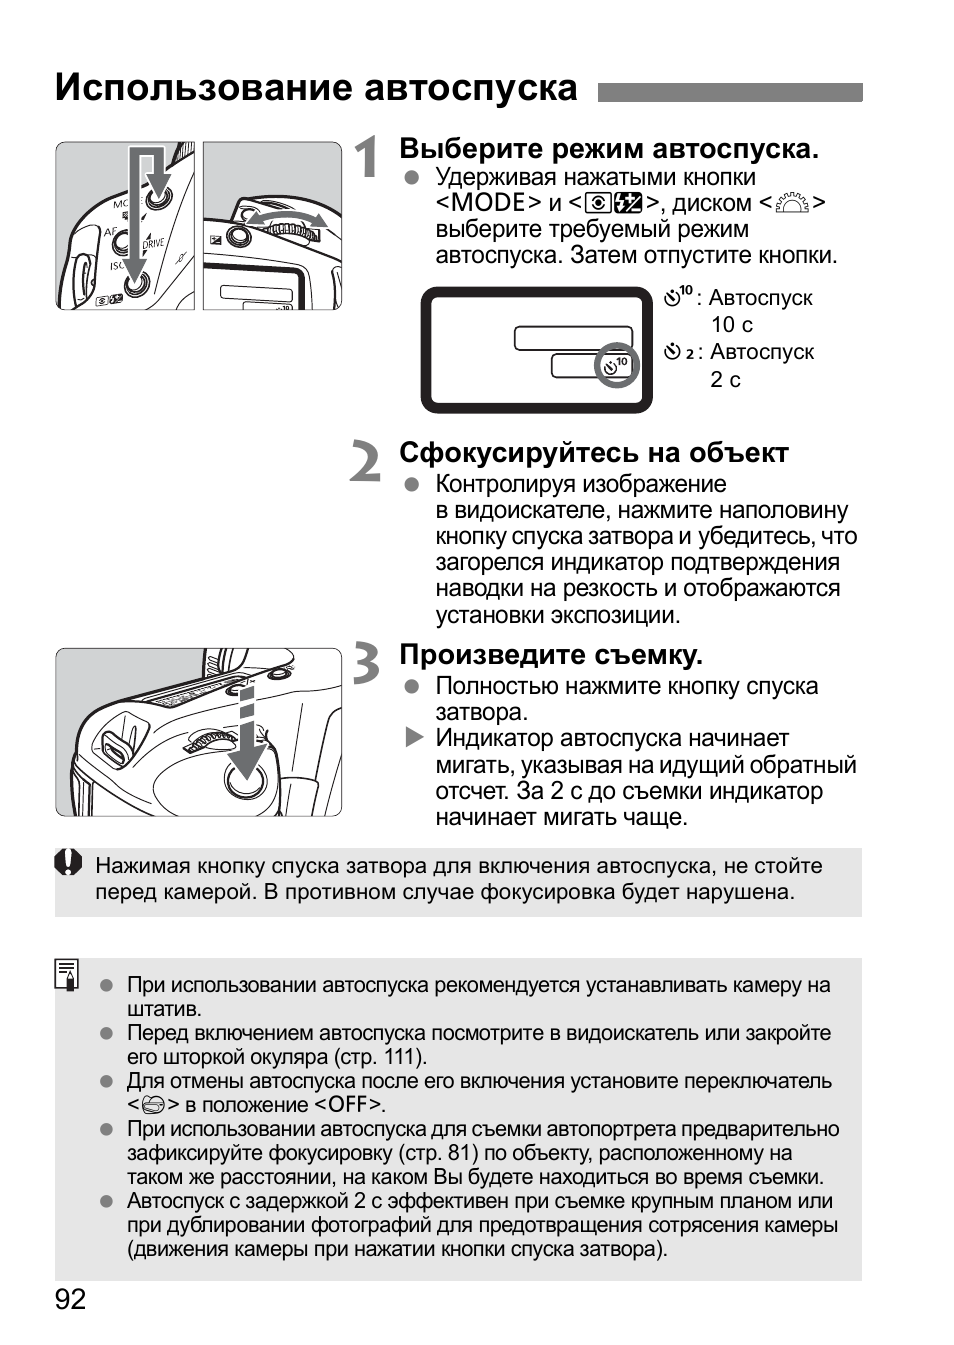 Использование автоспуска | Инструкция по эксплуатации Canon EOS 1D Mark II N | Страница 92 / 196